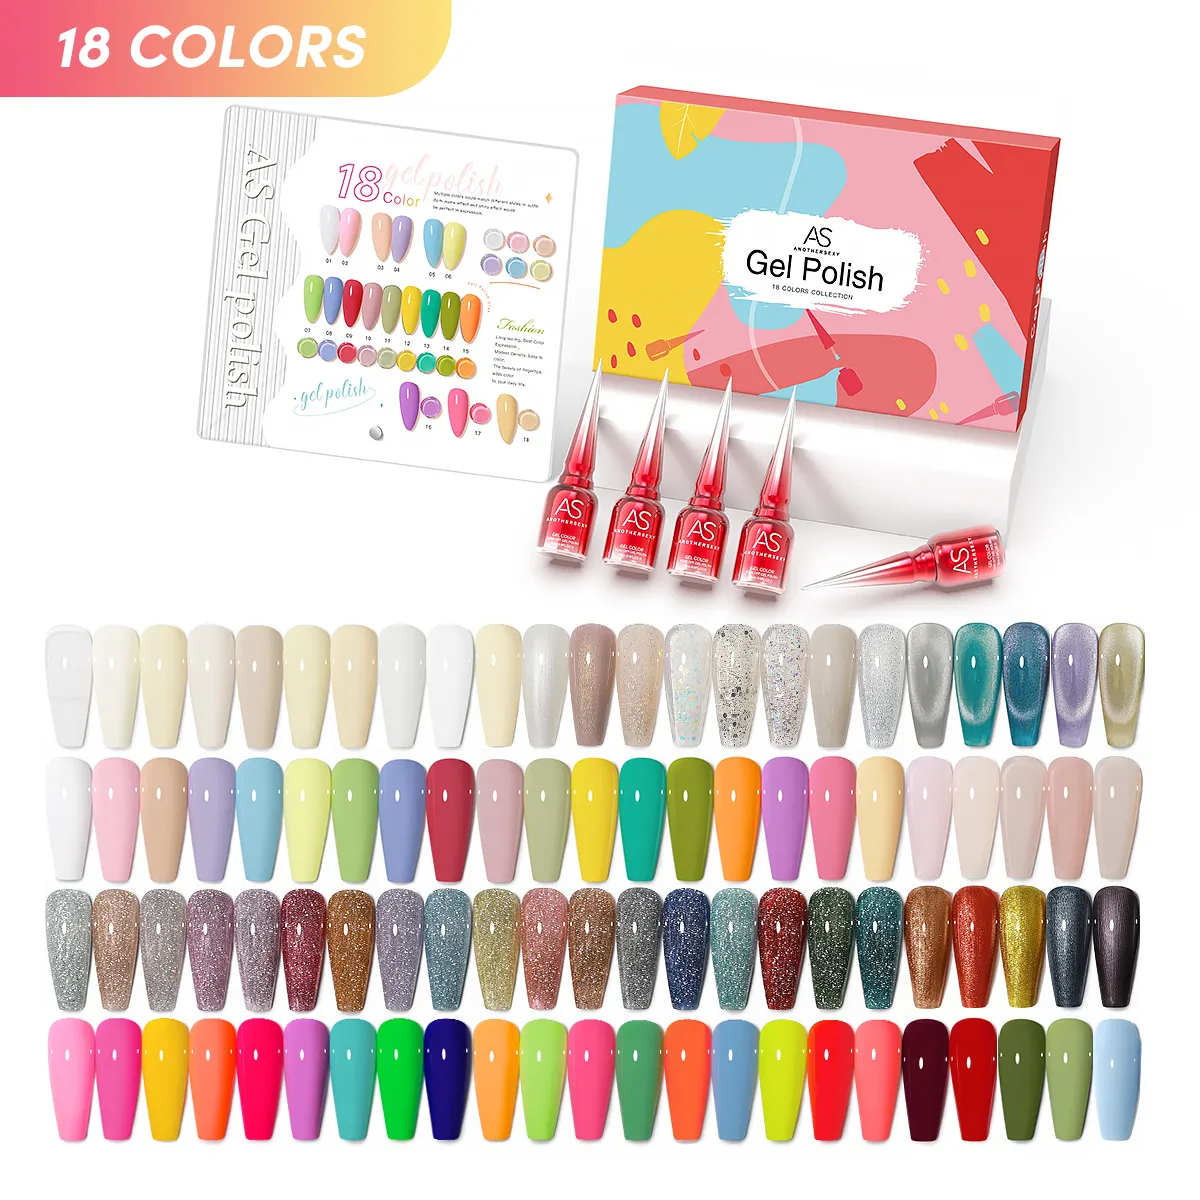 AS 18 Color Gel Nagellack Set 600 Farben Semi Permanent UV Led Gel Lack Nagel Gel Art Design Kit einweichen